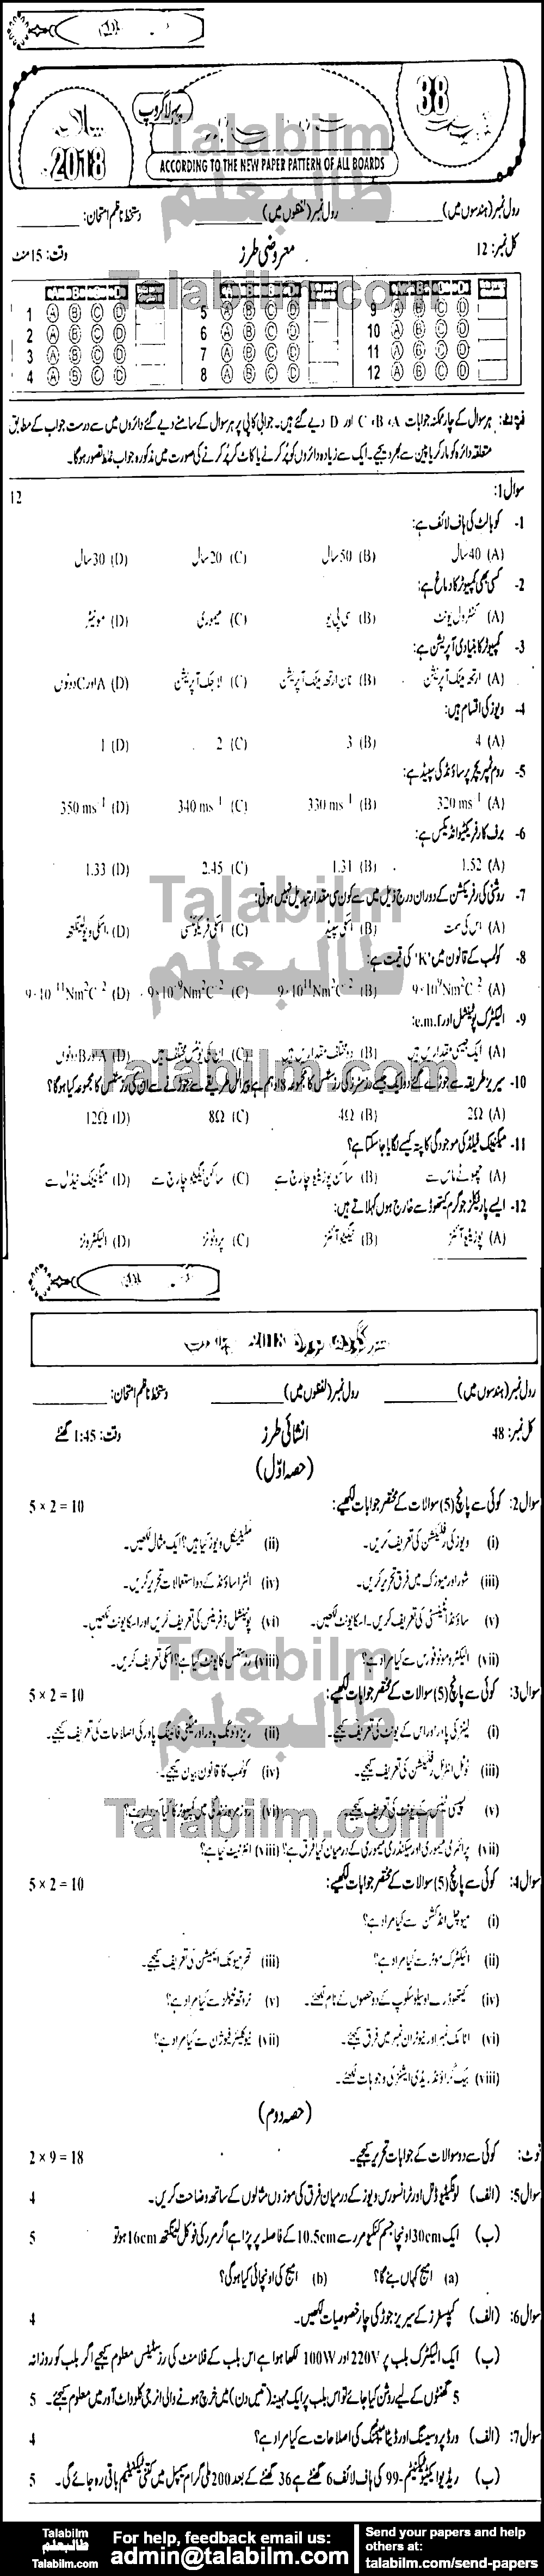 Physics 0 past paper for Urdu Medium 2018 Group-I